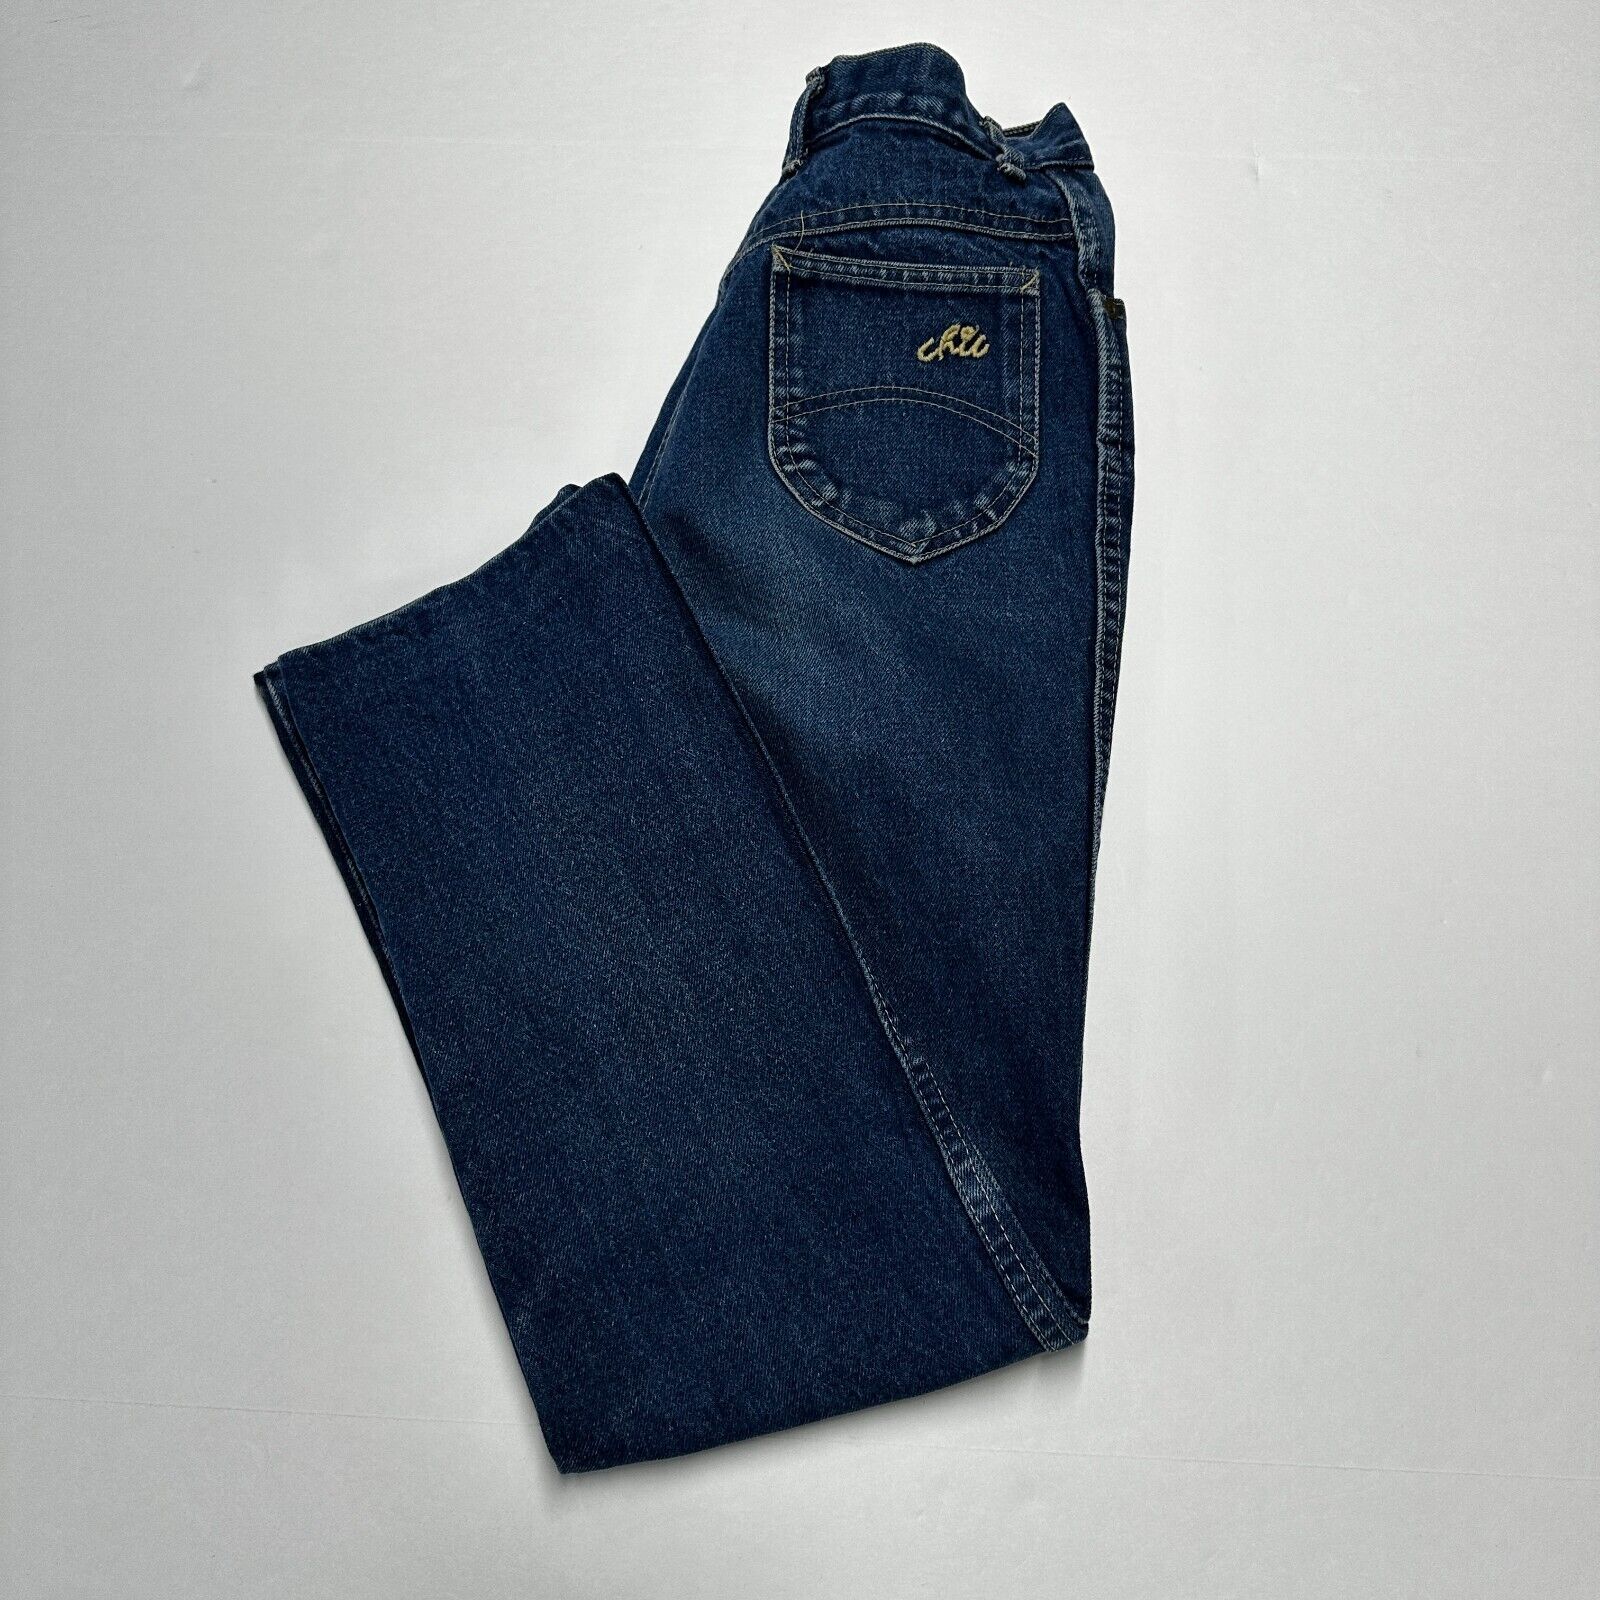 VTG Chic Womens Denim Blue Jeans Sz 8/9 High Rise Straight Leg Pants 26x28